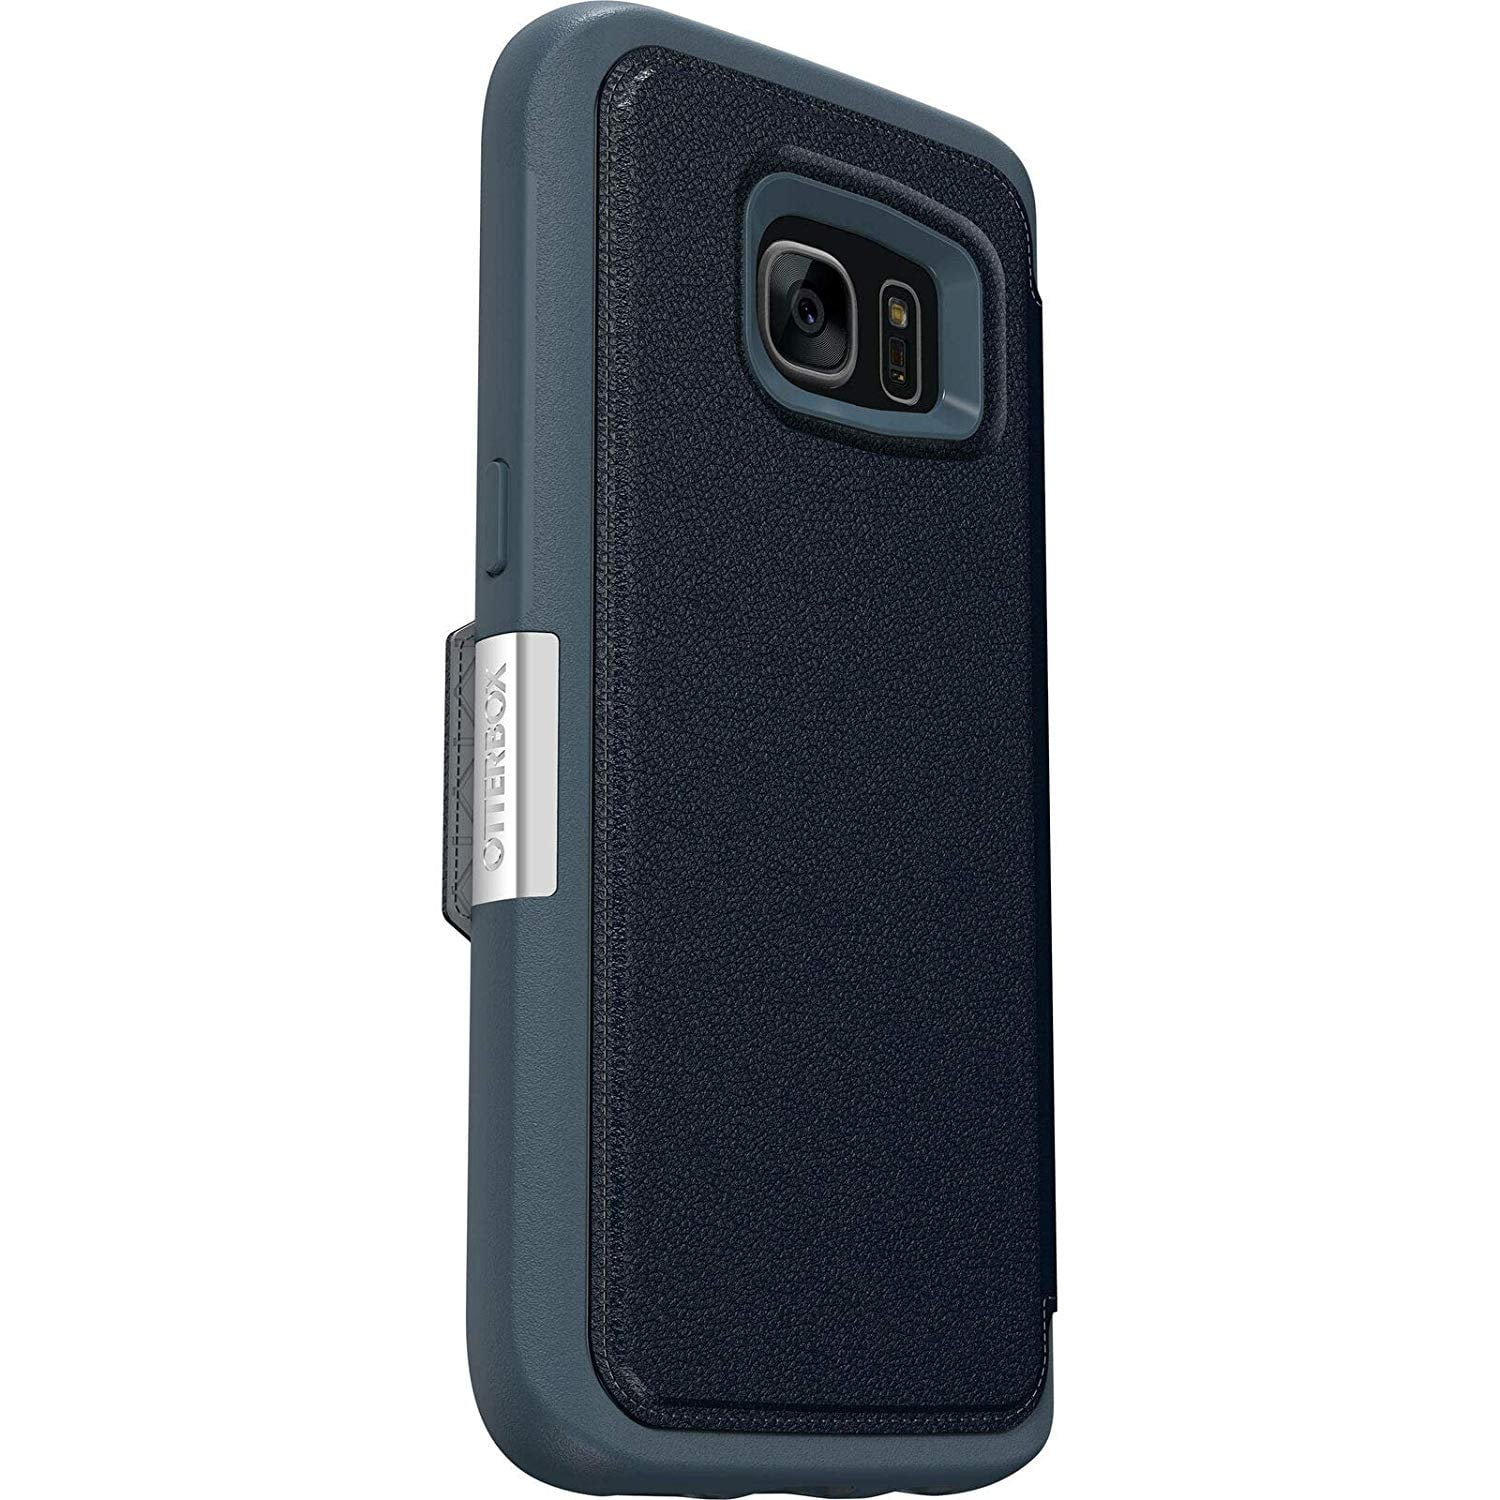 moe Vergelijken Edele OtterBox Strada Series Leather Wallet Case for Samsung Galaxy S7 Edge  (ONLY) - Bulk Packaging - Night Cannon Blue - Walmart.com